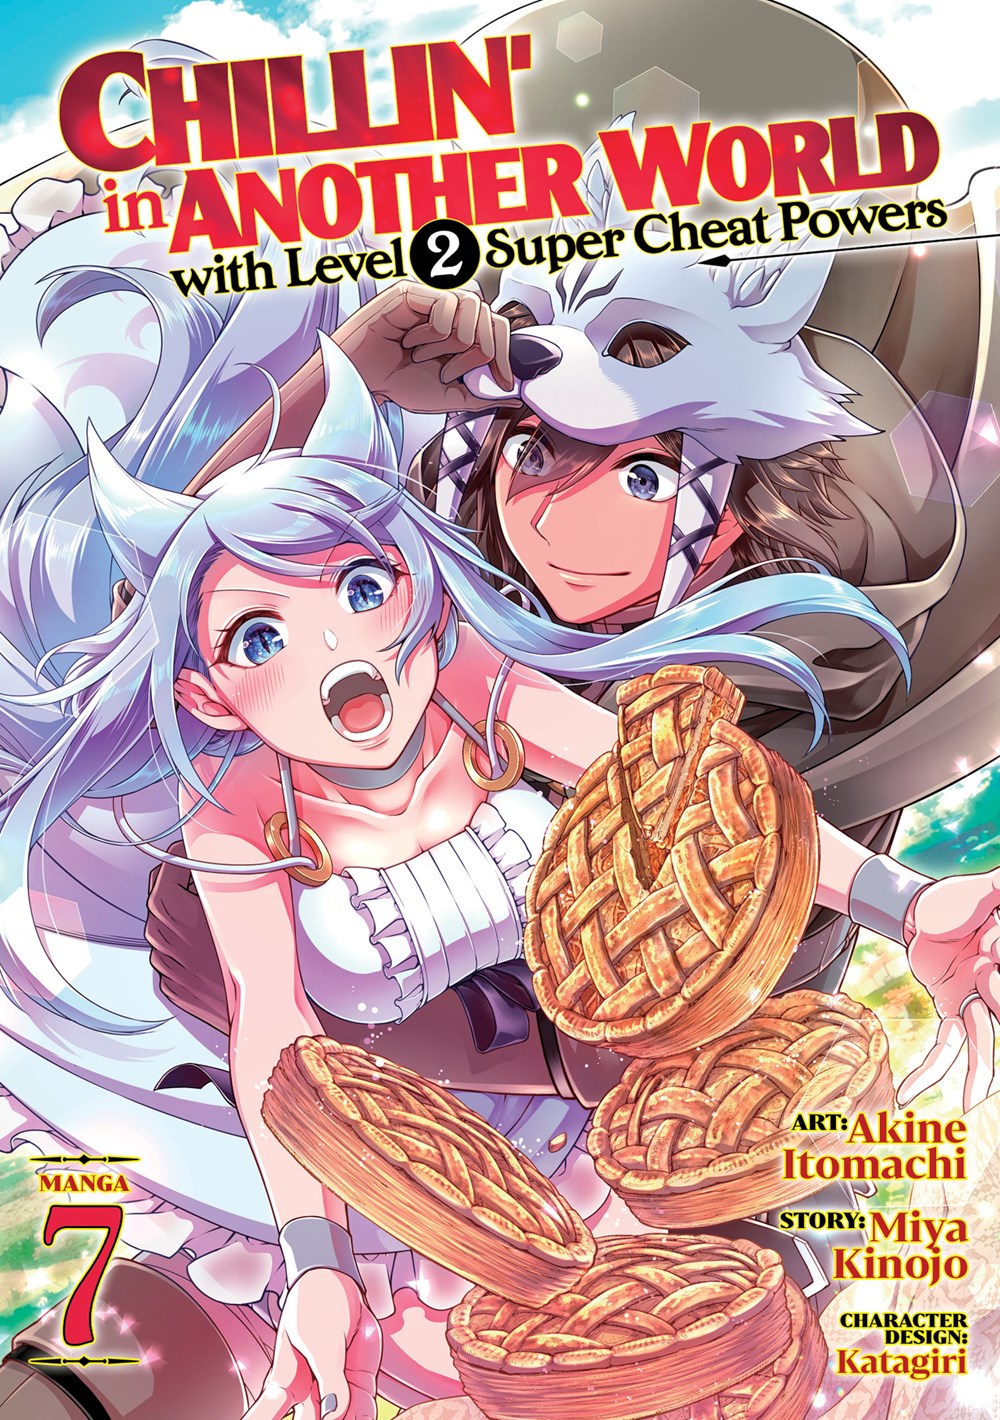 Anime de Chillin' in Another World with Level 2 Super Cheat Powers é  oficialmente anunciado - Crunchyroll Notícias